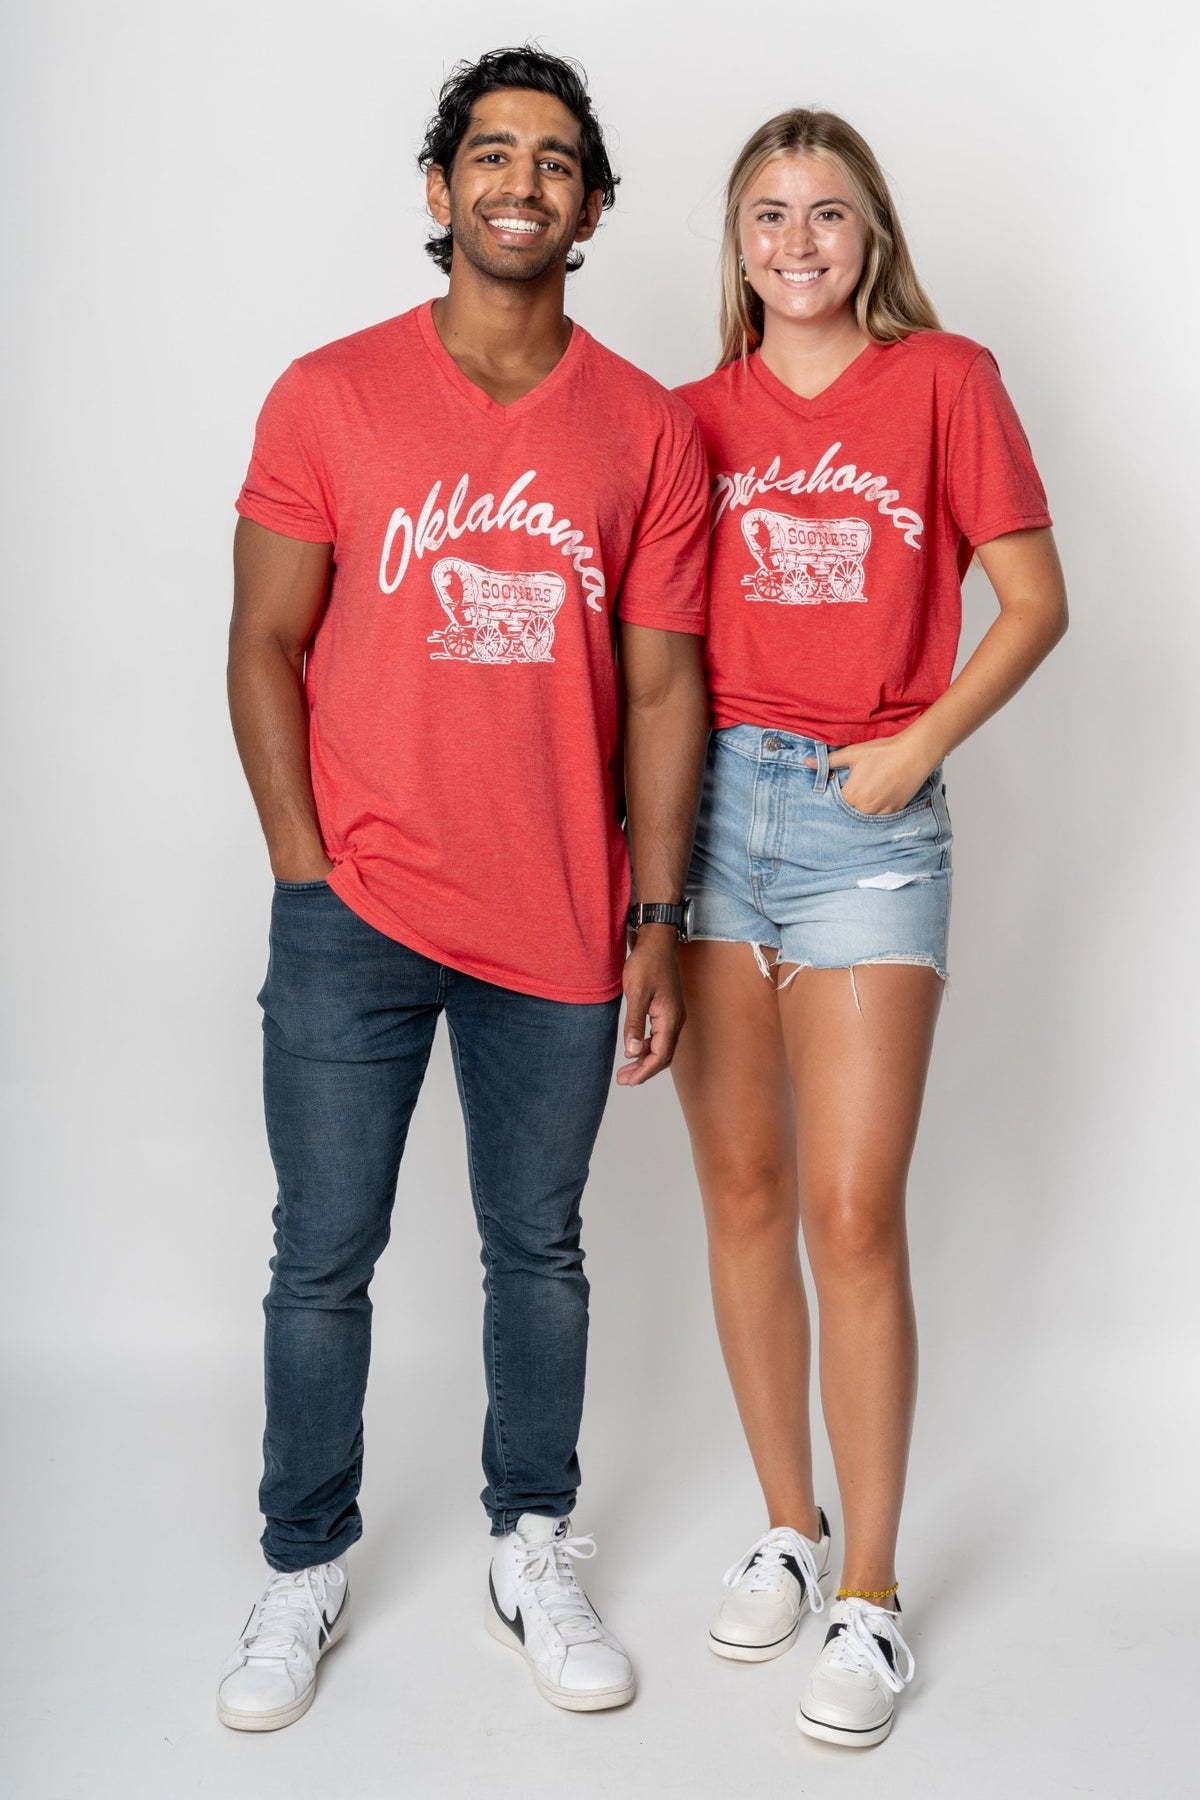 OU OU script schooner unisex v-neck t-shirt red t-shirt | Lush Fashion Lounge Trendy Oklahoma University Sooners Apparel & Cute Gameday T-Shirts